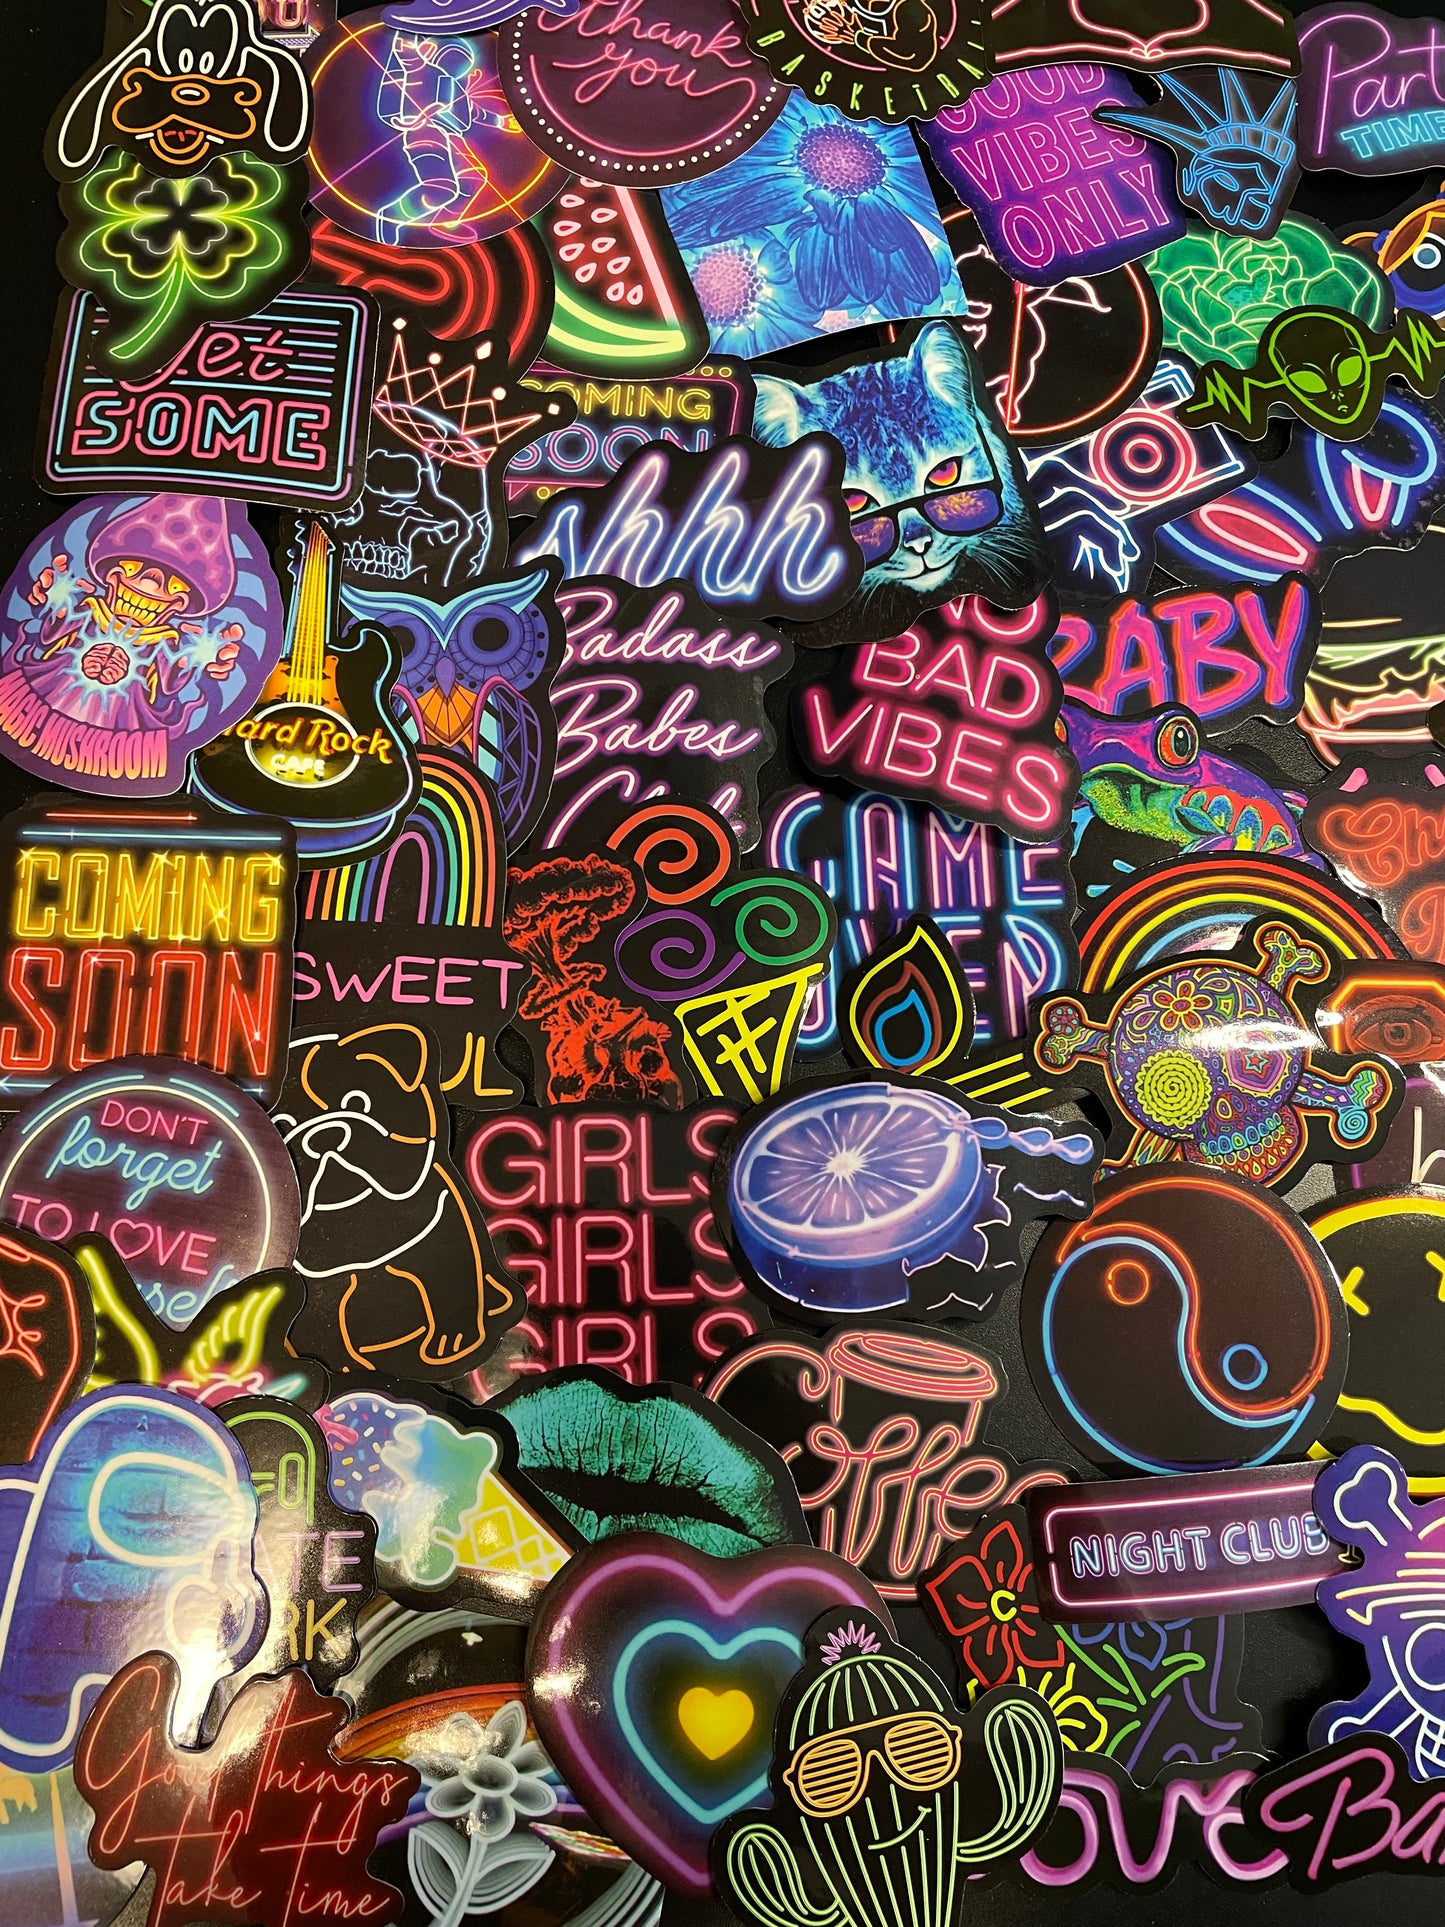 Neon Stickers